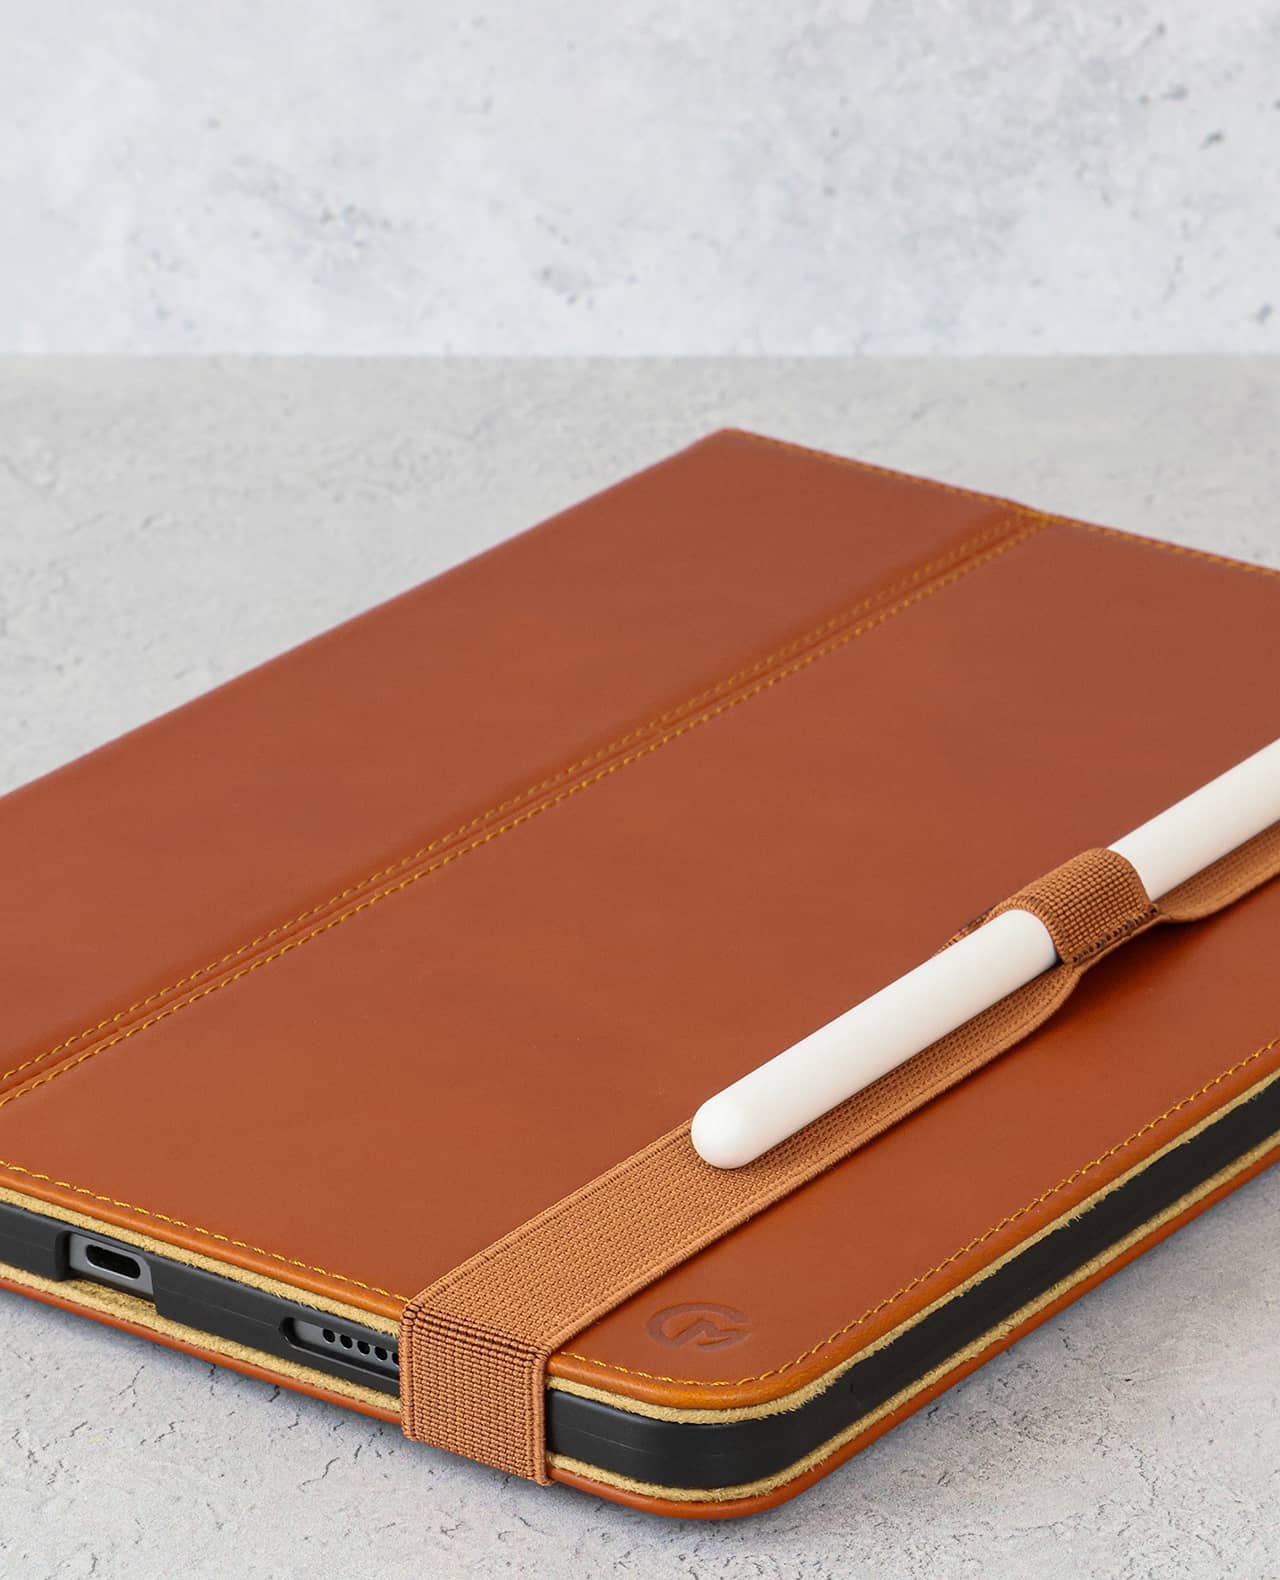 Apple iPad Pro 11 Leather Case - Casemade USA